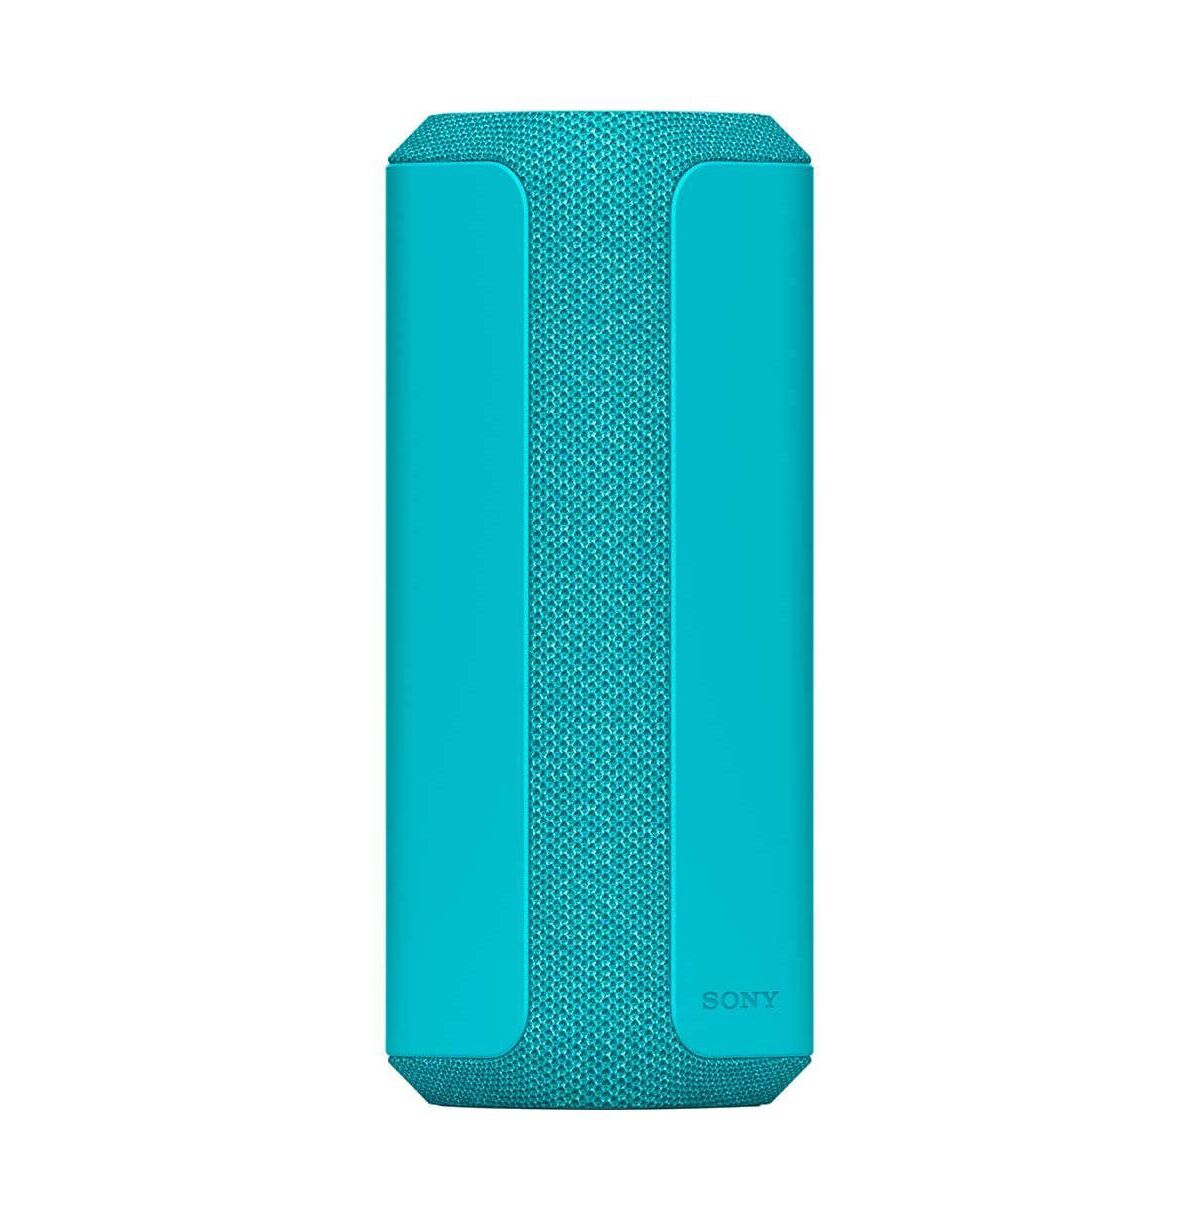 Sony Blue Portable X-Series Bluetooth Speaker - Bright Blue